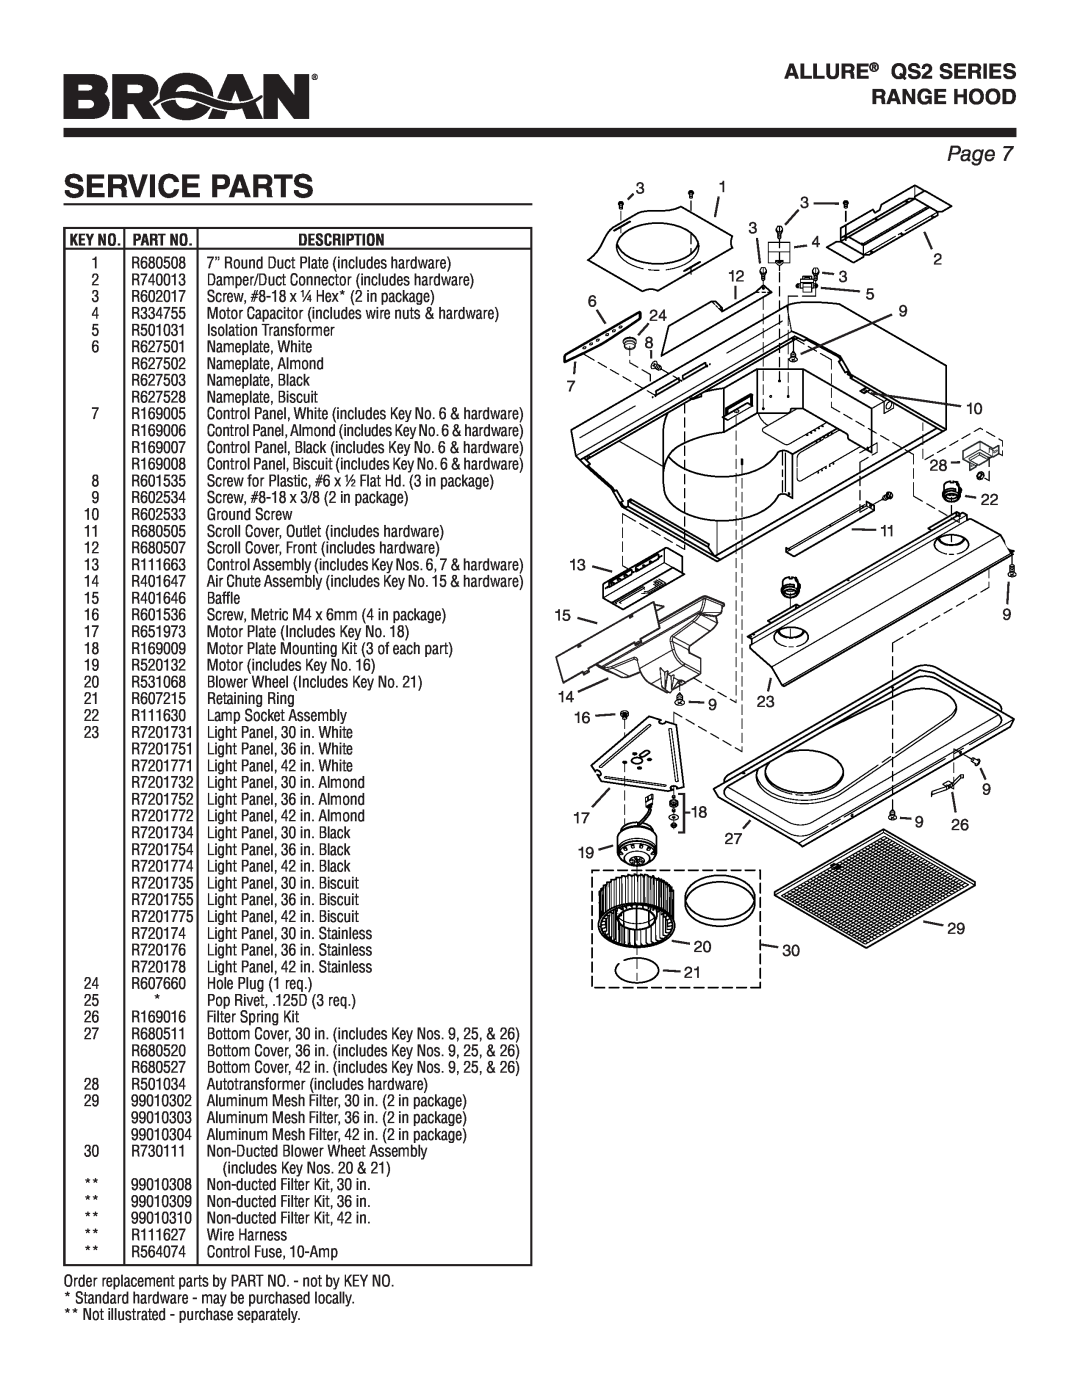 Broan QS242SS warranty Service Parts, Key No. Part No, ALLURE QS2 SERIES RANGE HOOD, Page 